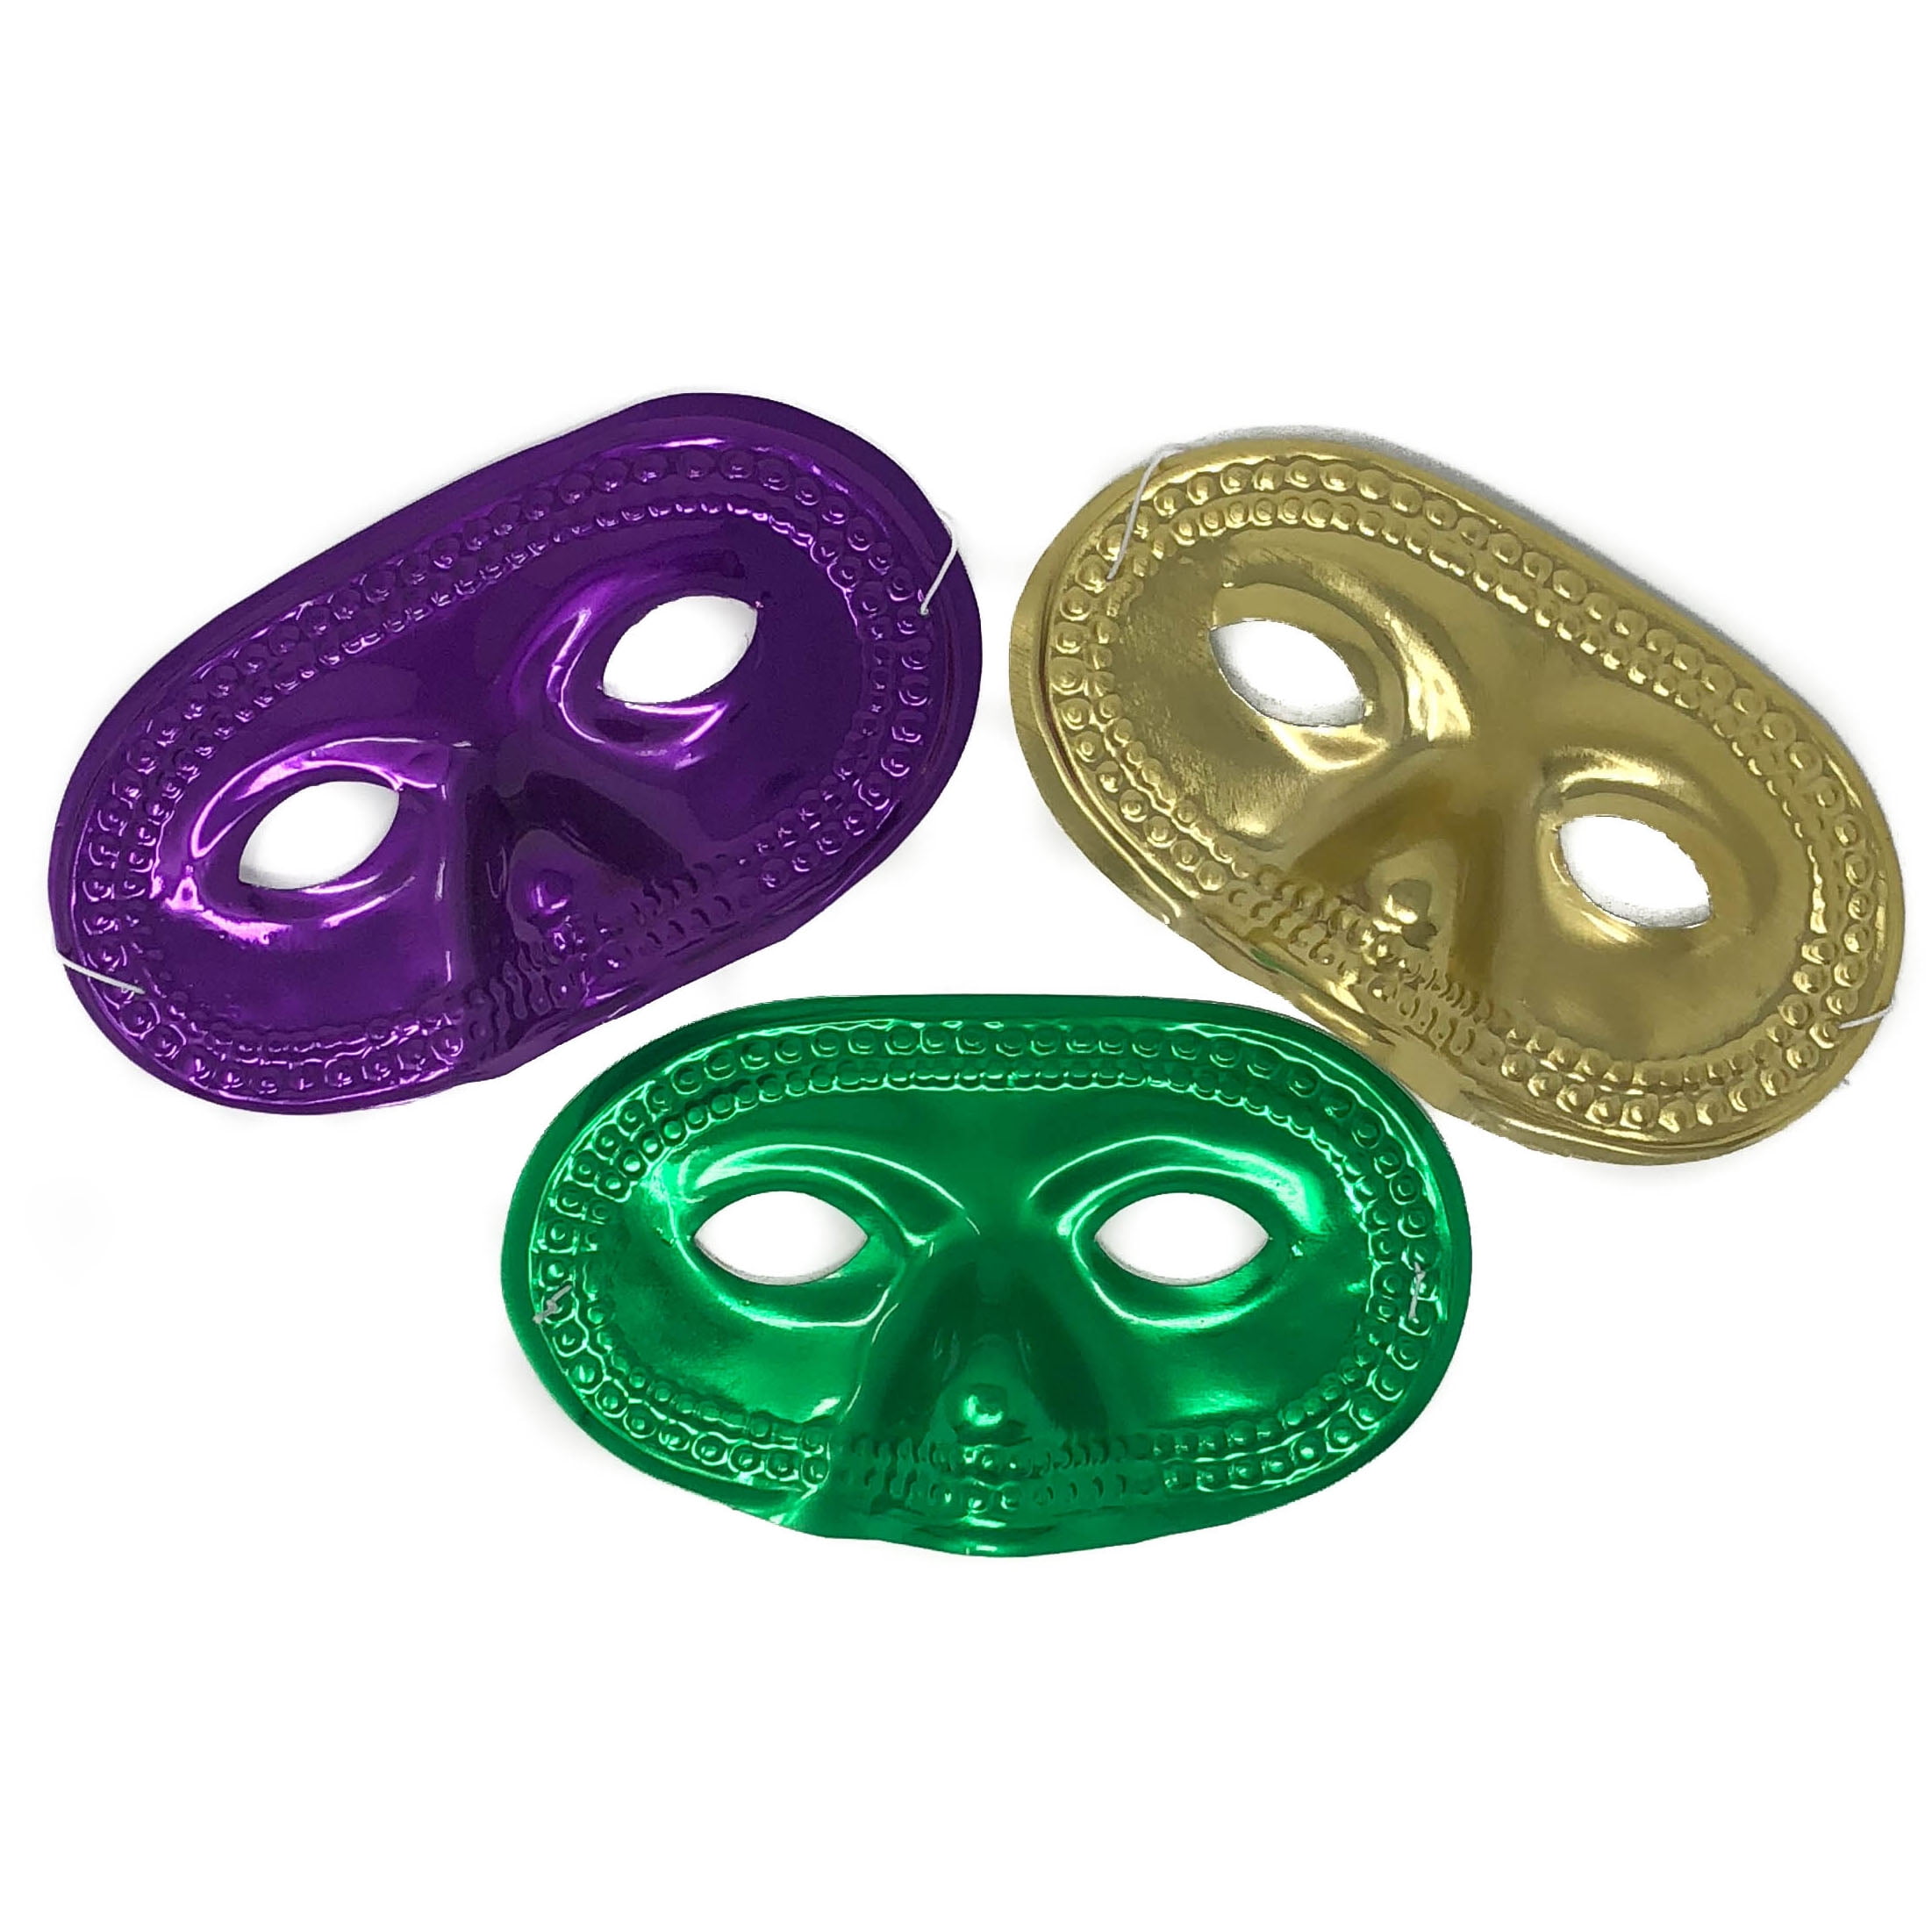 50 Mardi Gras Masks - Metallic Masquerade Half Party Masks - Walmart.com